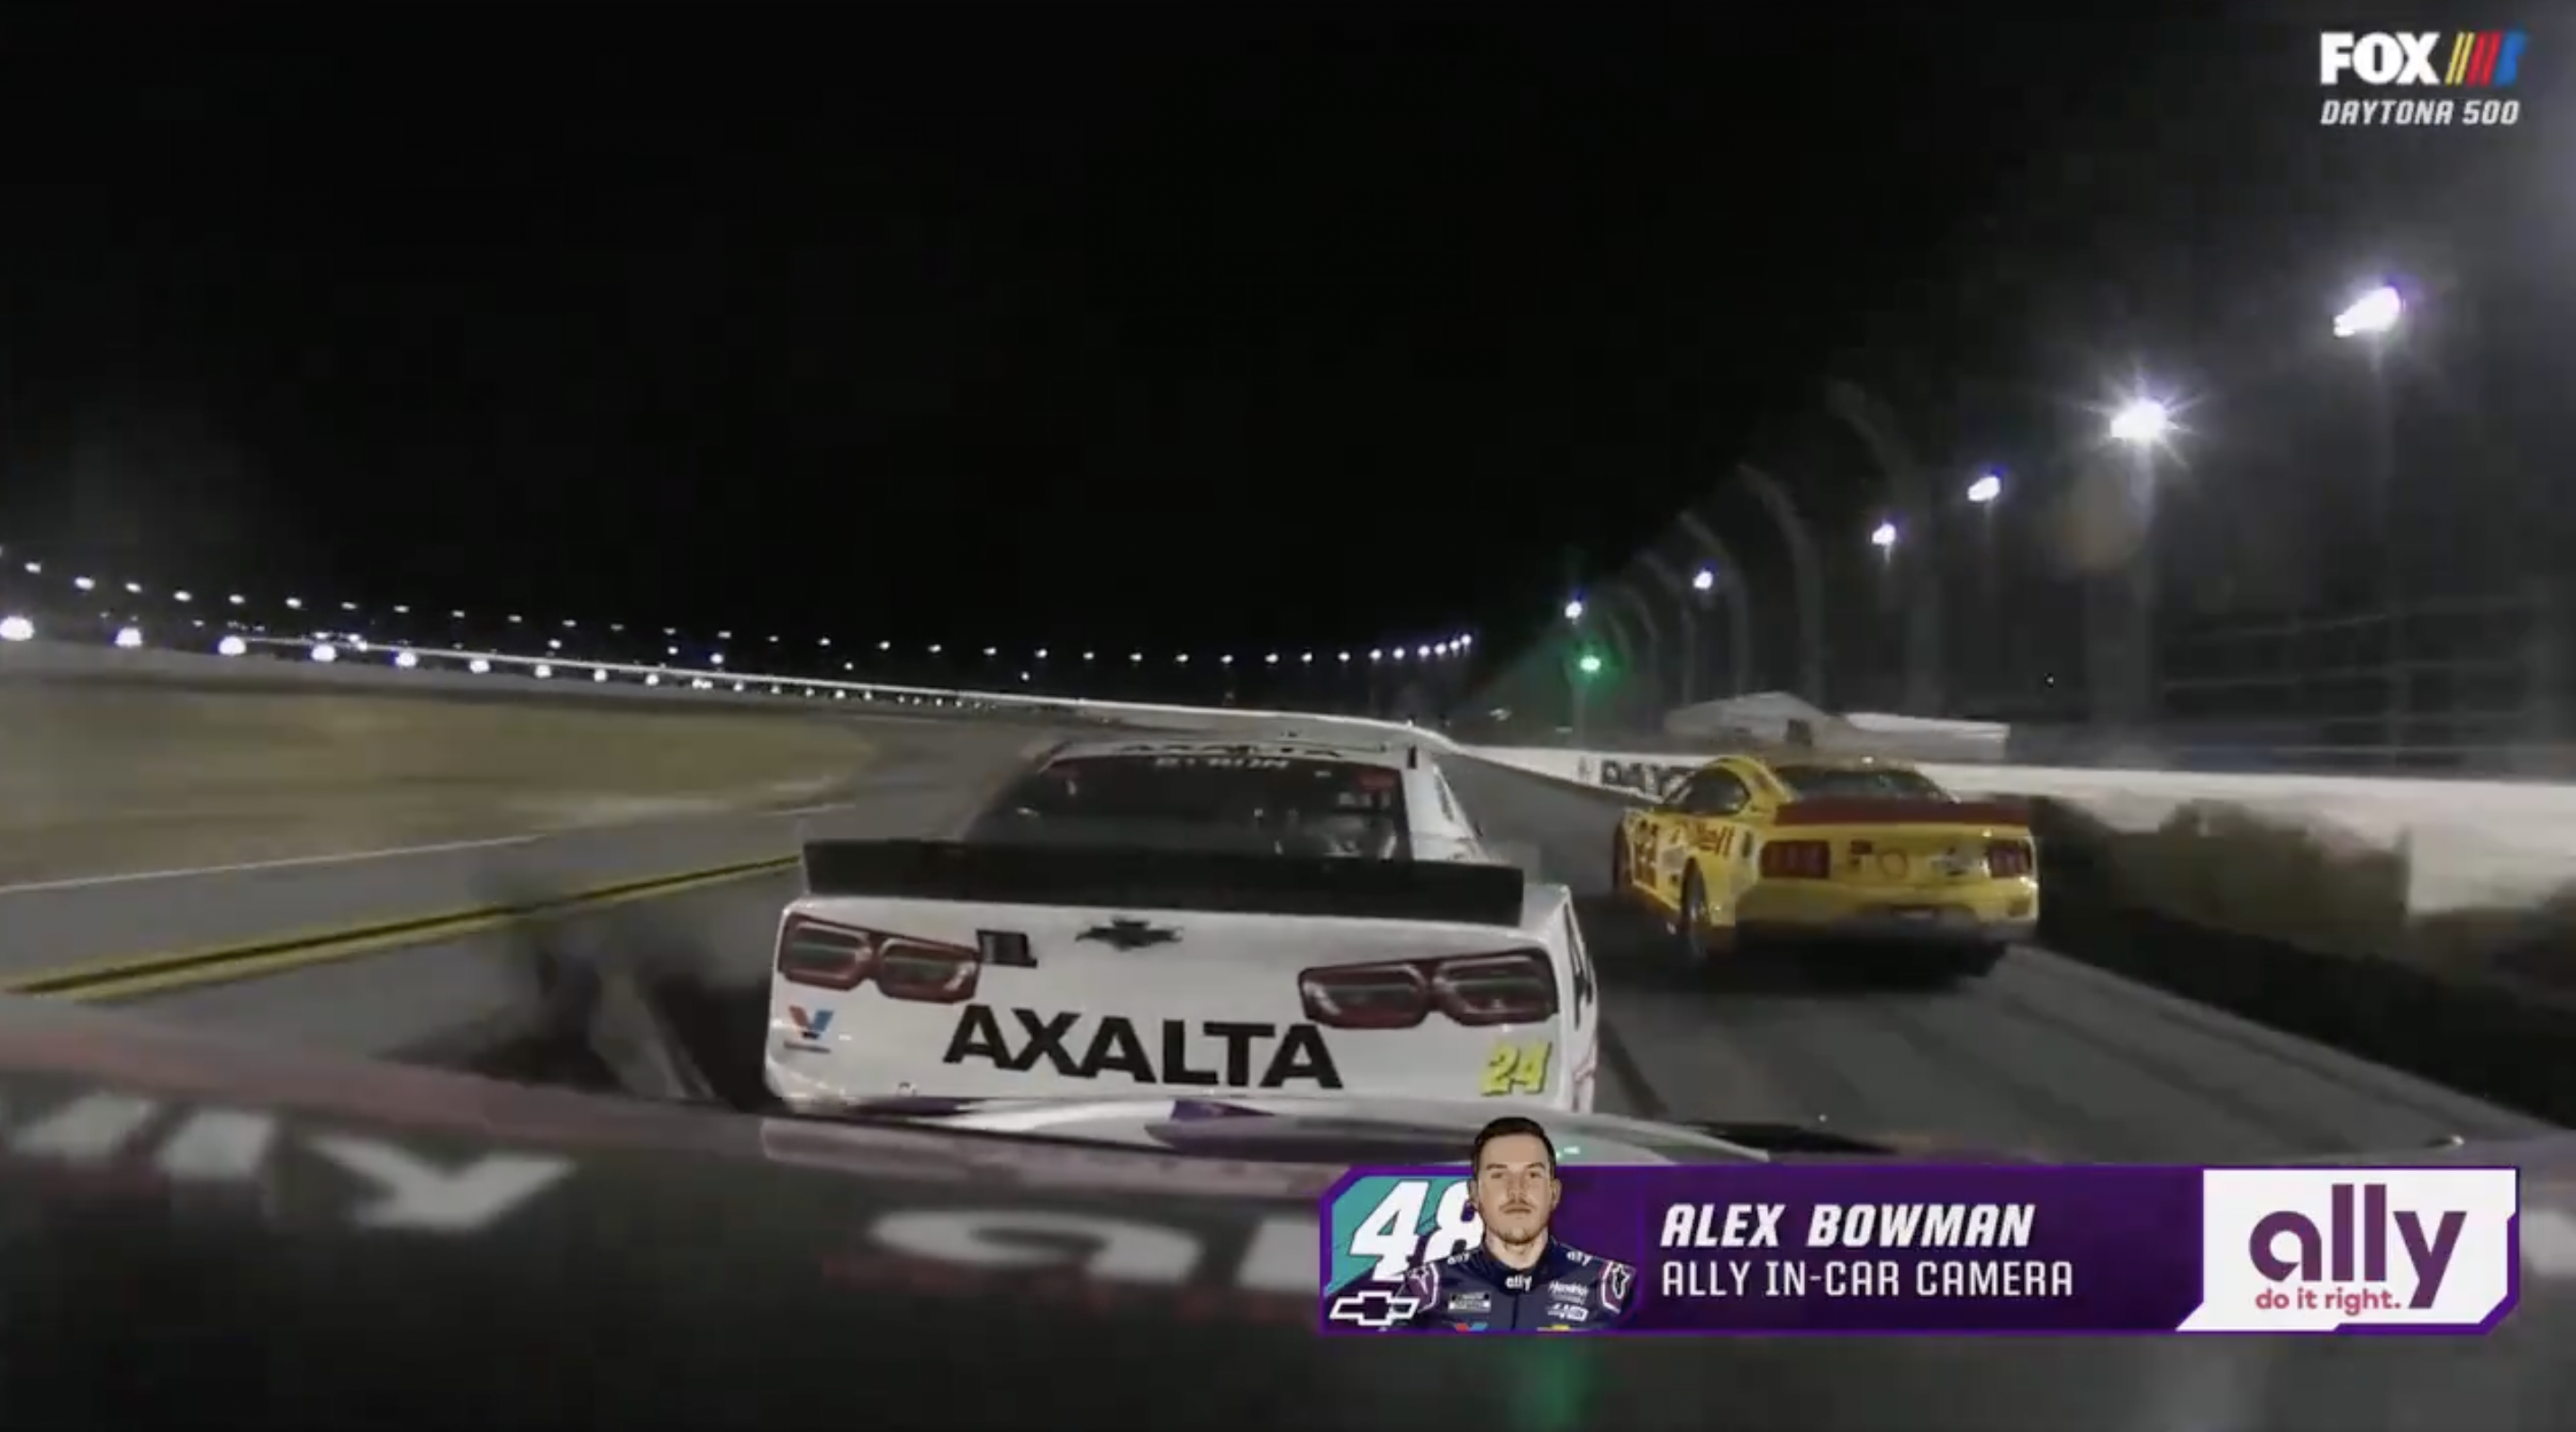 In-car camera shot during Fox's broadcast of Daytona 500